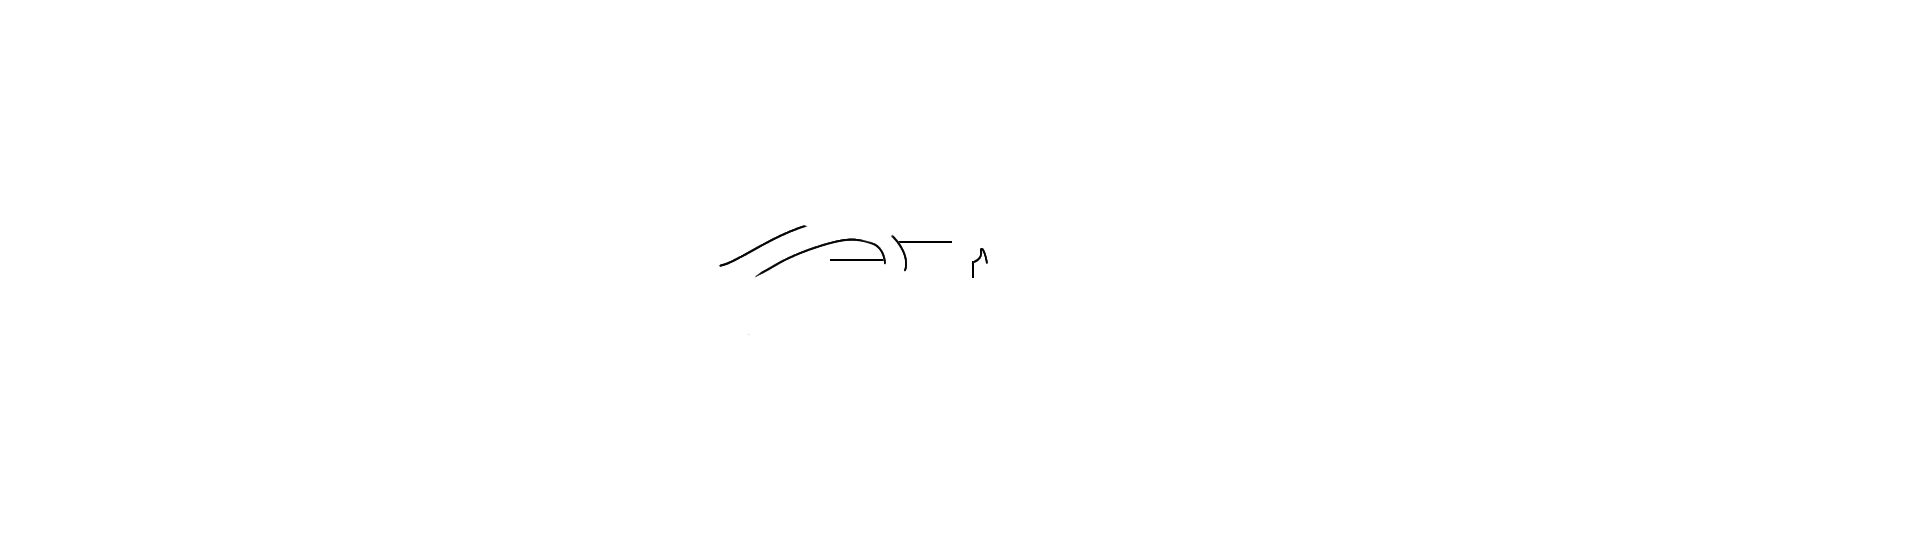 BLOOD BOTTOM